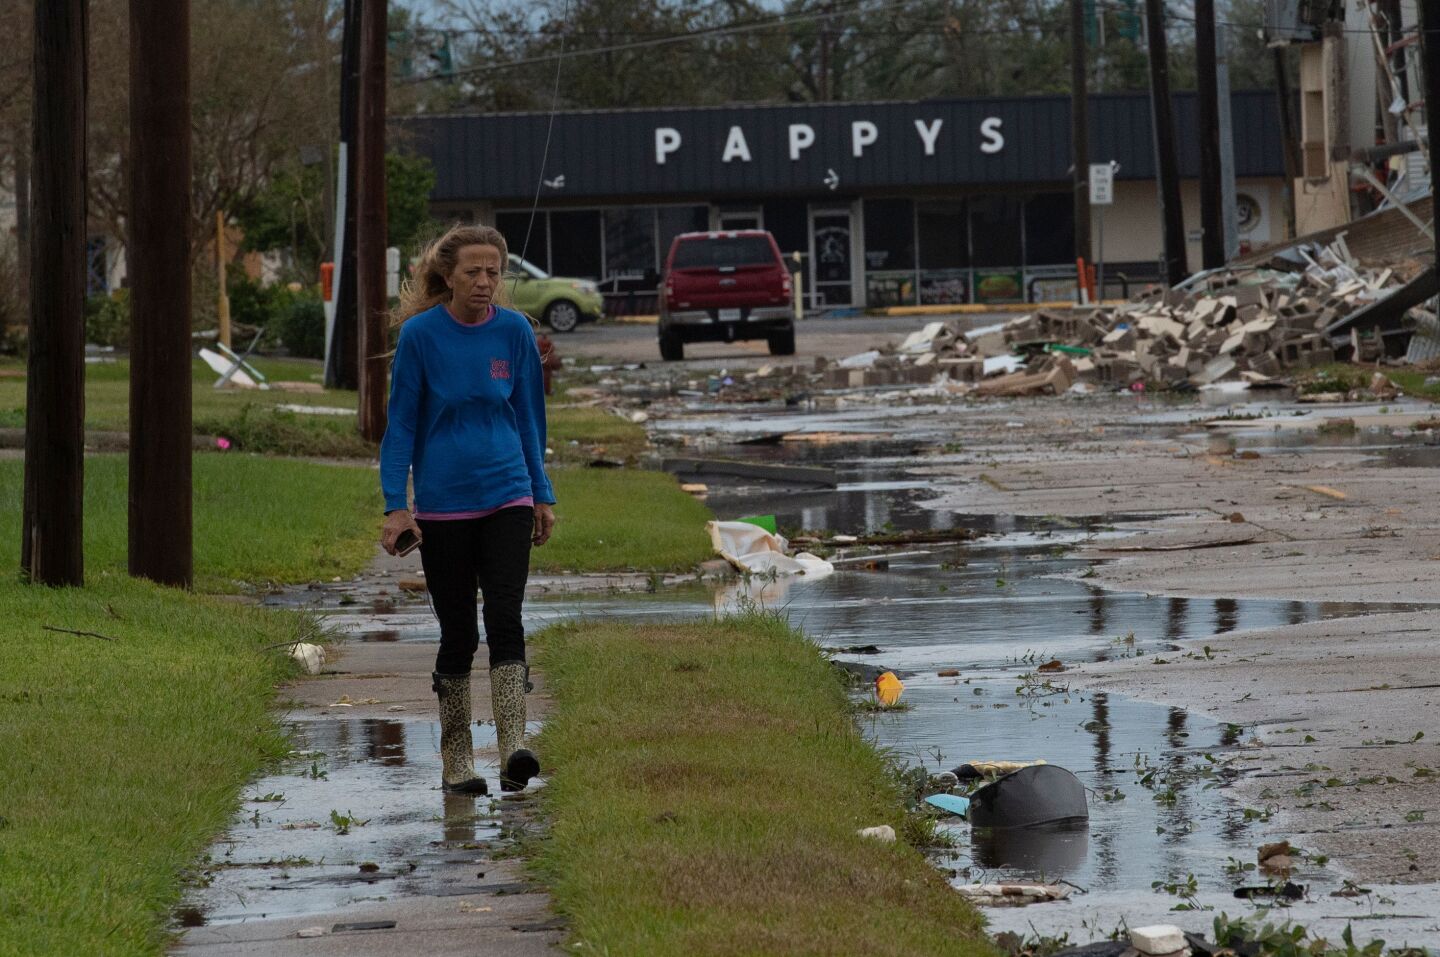 From a sidewalk, a woman observes a debris-filled Lake Charles street.